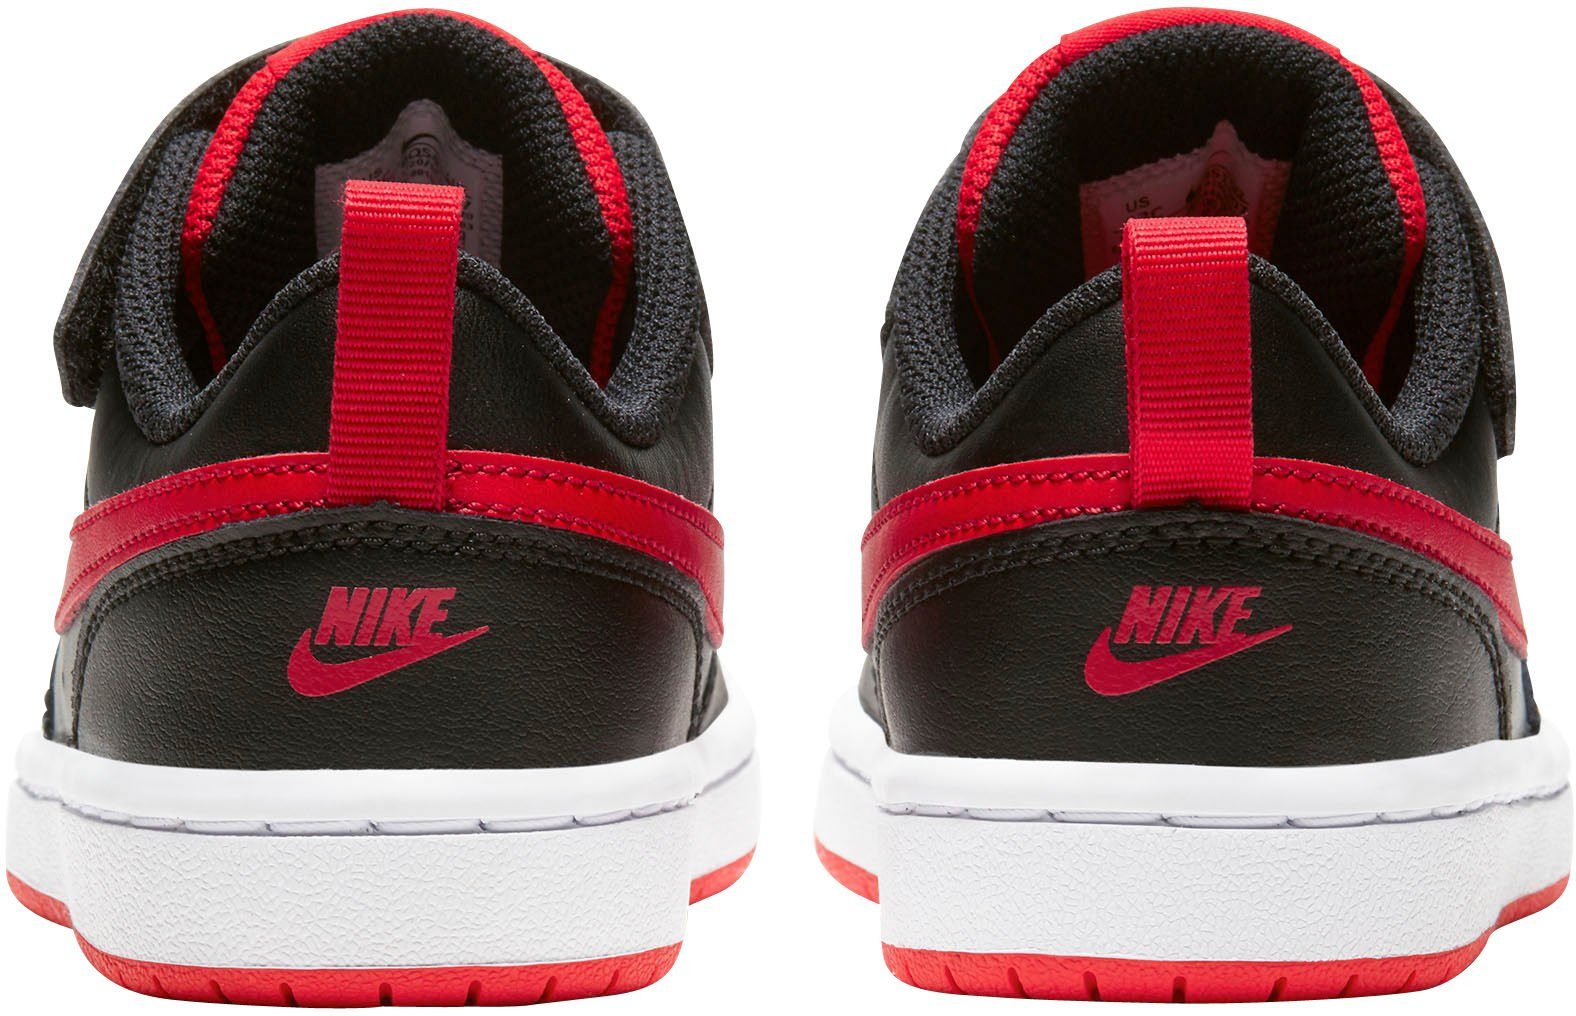 Nike Sportswear Court Borough Low des auf 1 den Air 2 Force Design Spuren Sneaker